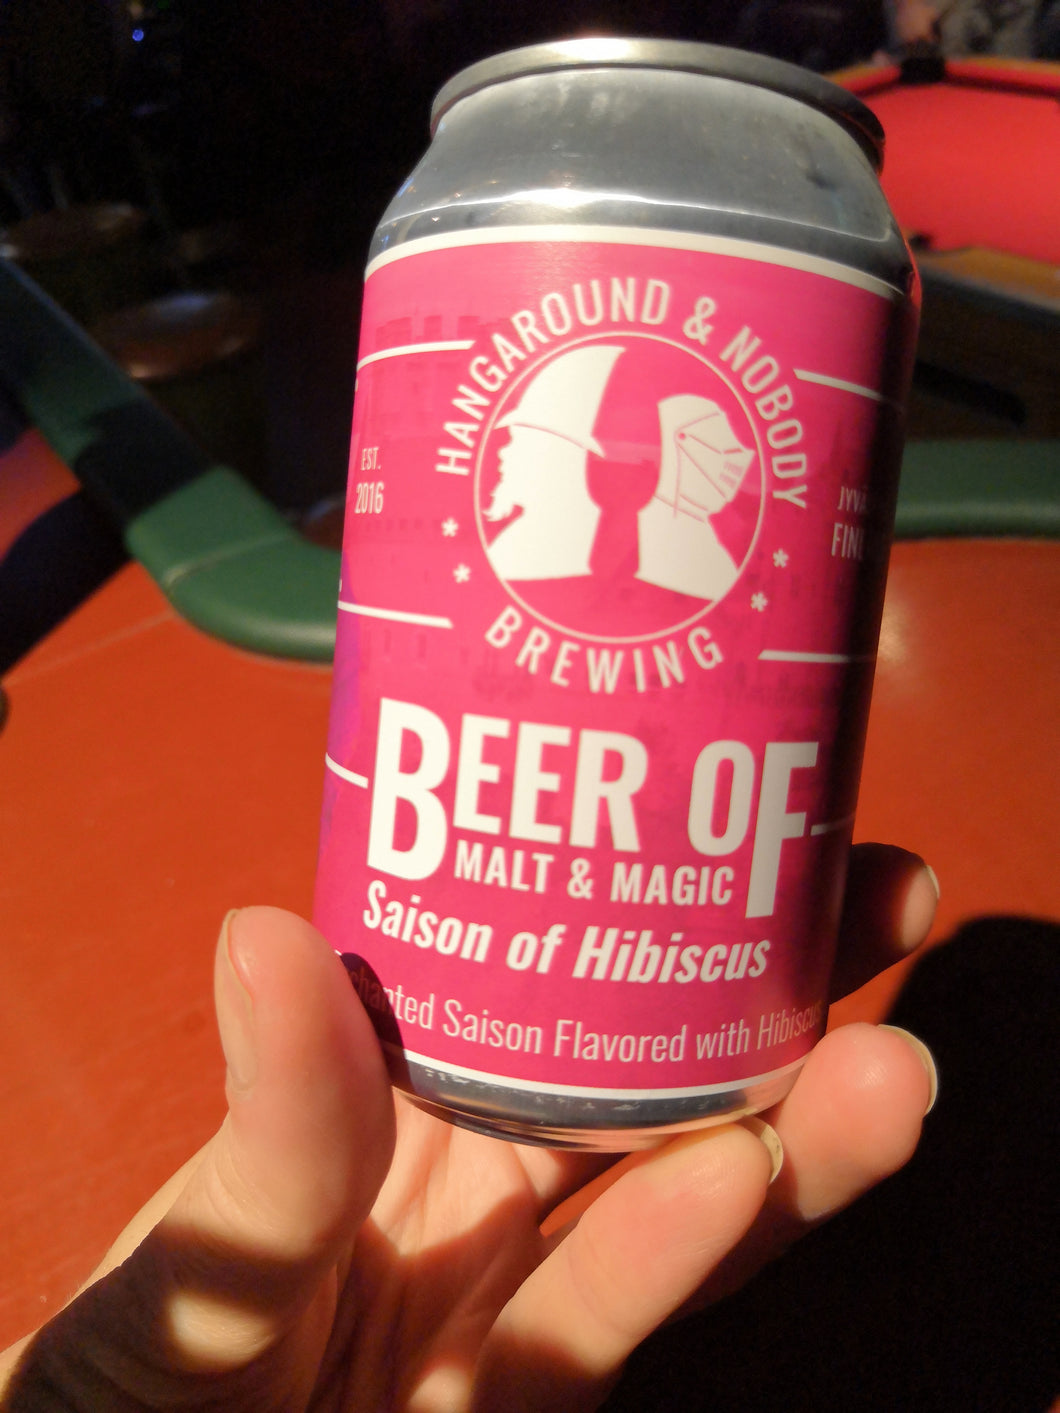 Hangaround & Nobody Brewing Beer of malt and magic: Saison of Hibiscus